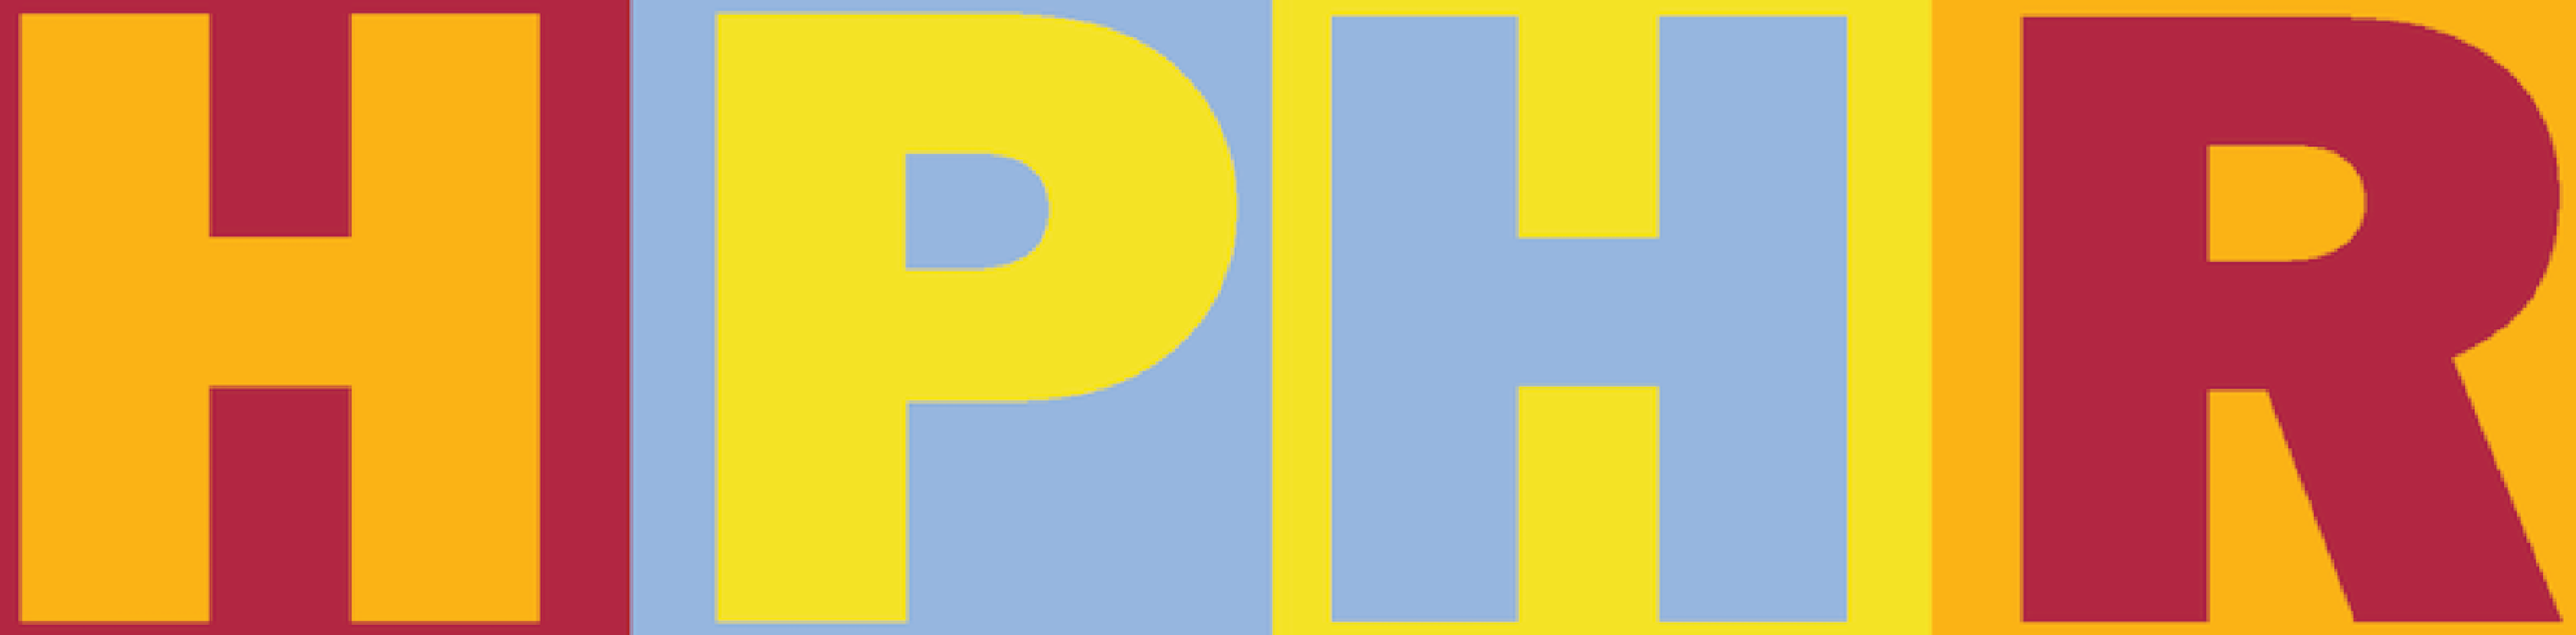 HPHR Logo Horizontal